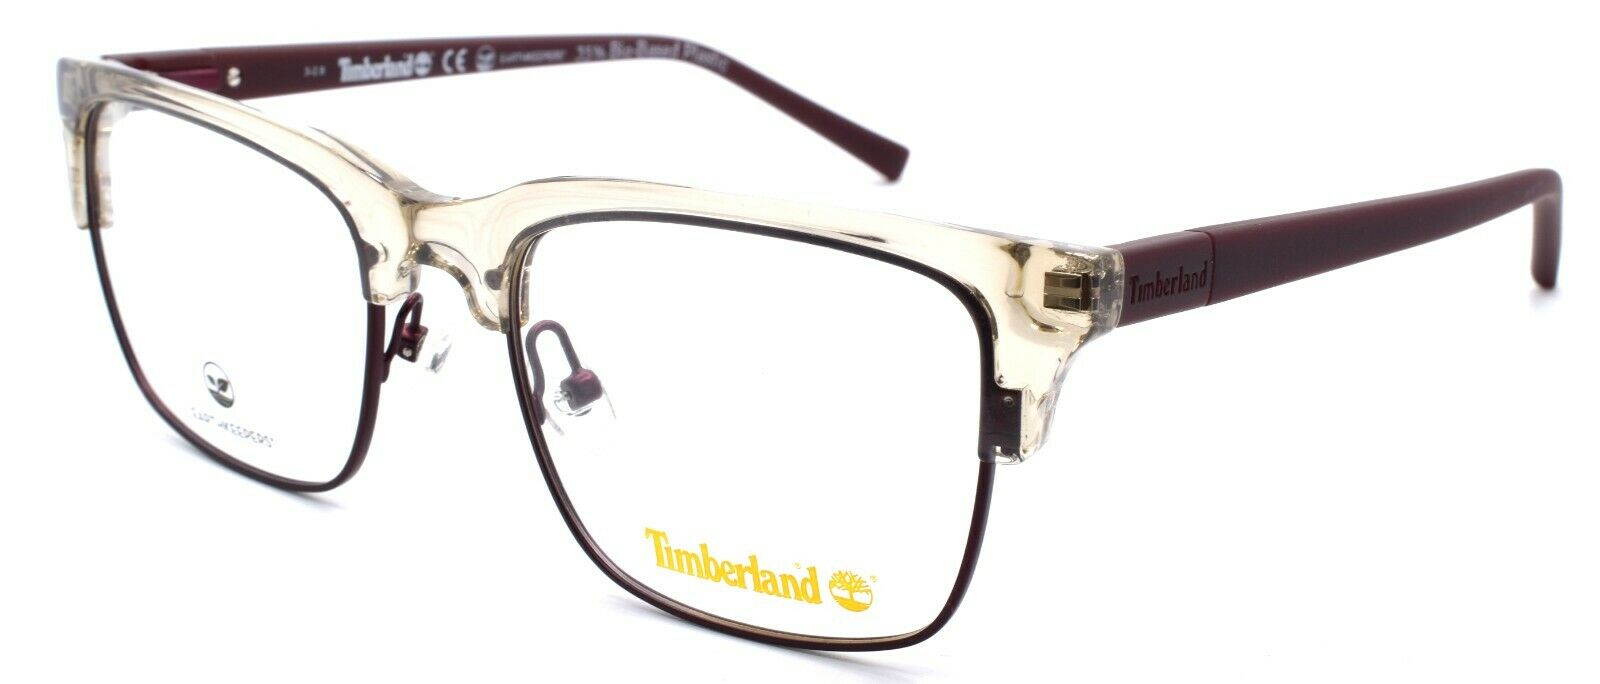 1-TIMBERLAND TB1601 057 Men's Eyeglasses Frames 53-19-145 Beige Crystal / Burgundy-664689964260-IKSpecs